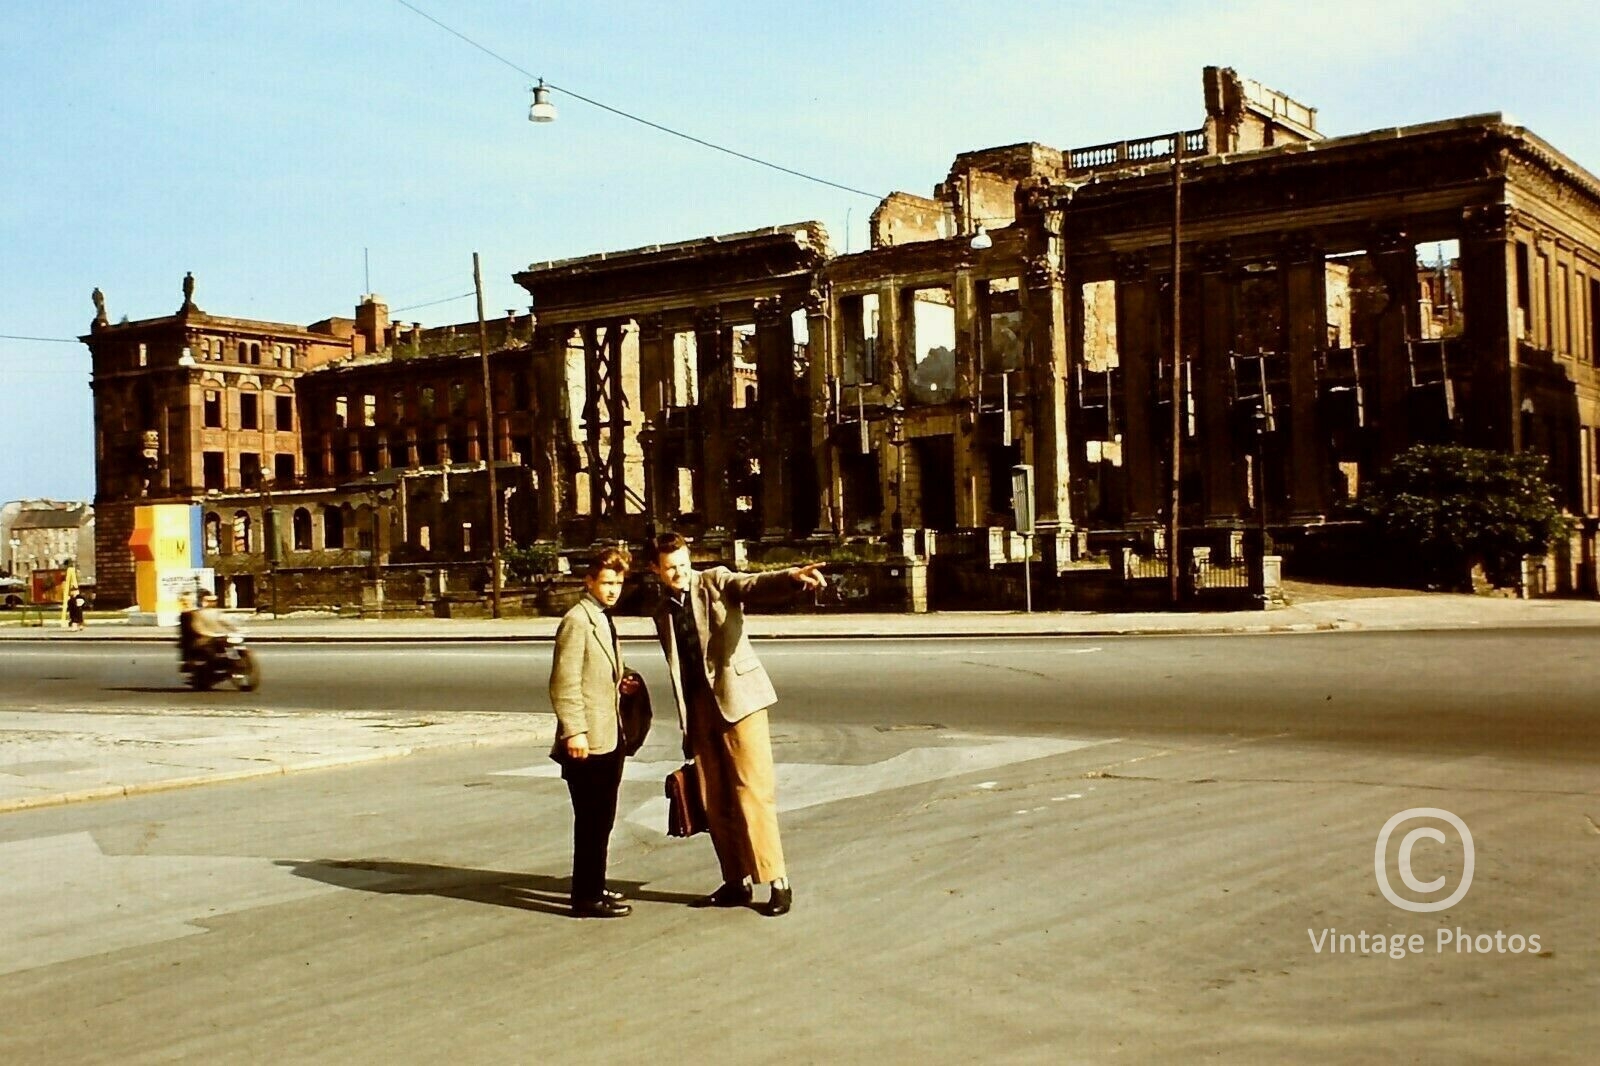 1958 German Street Scene with Bombing Ruins